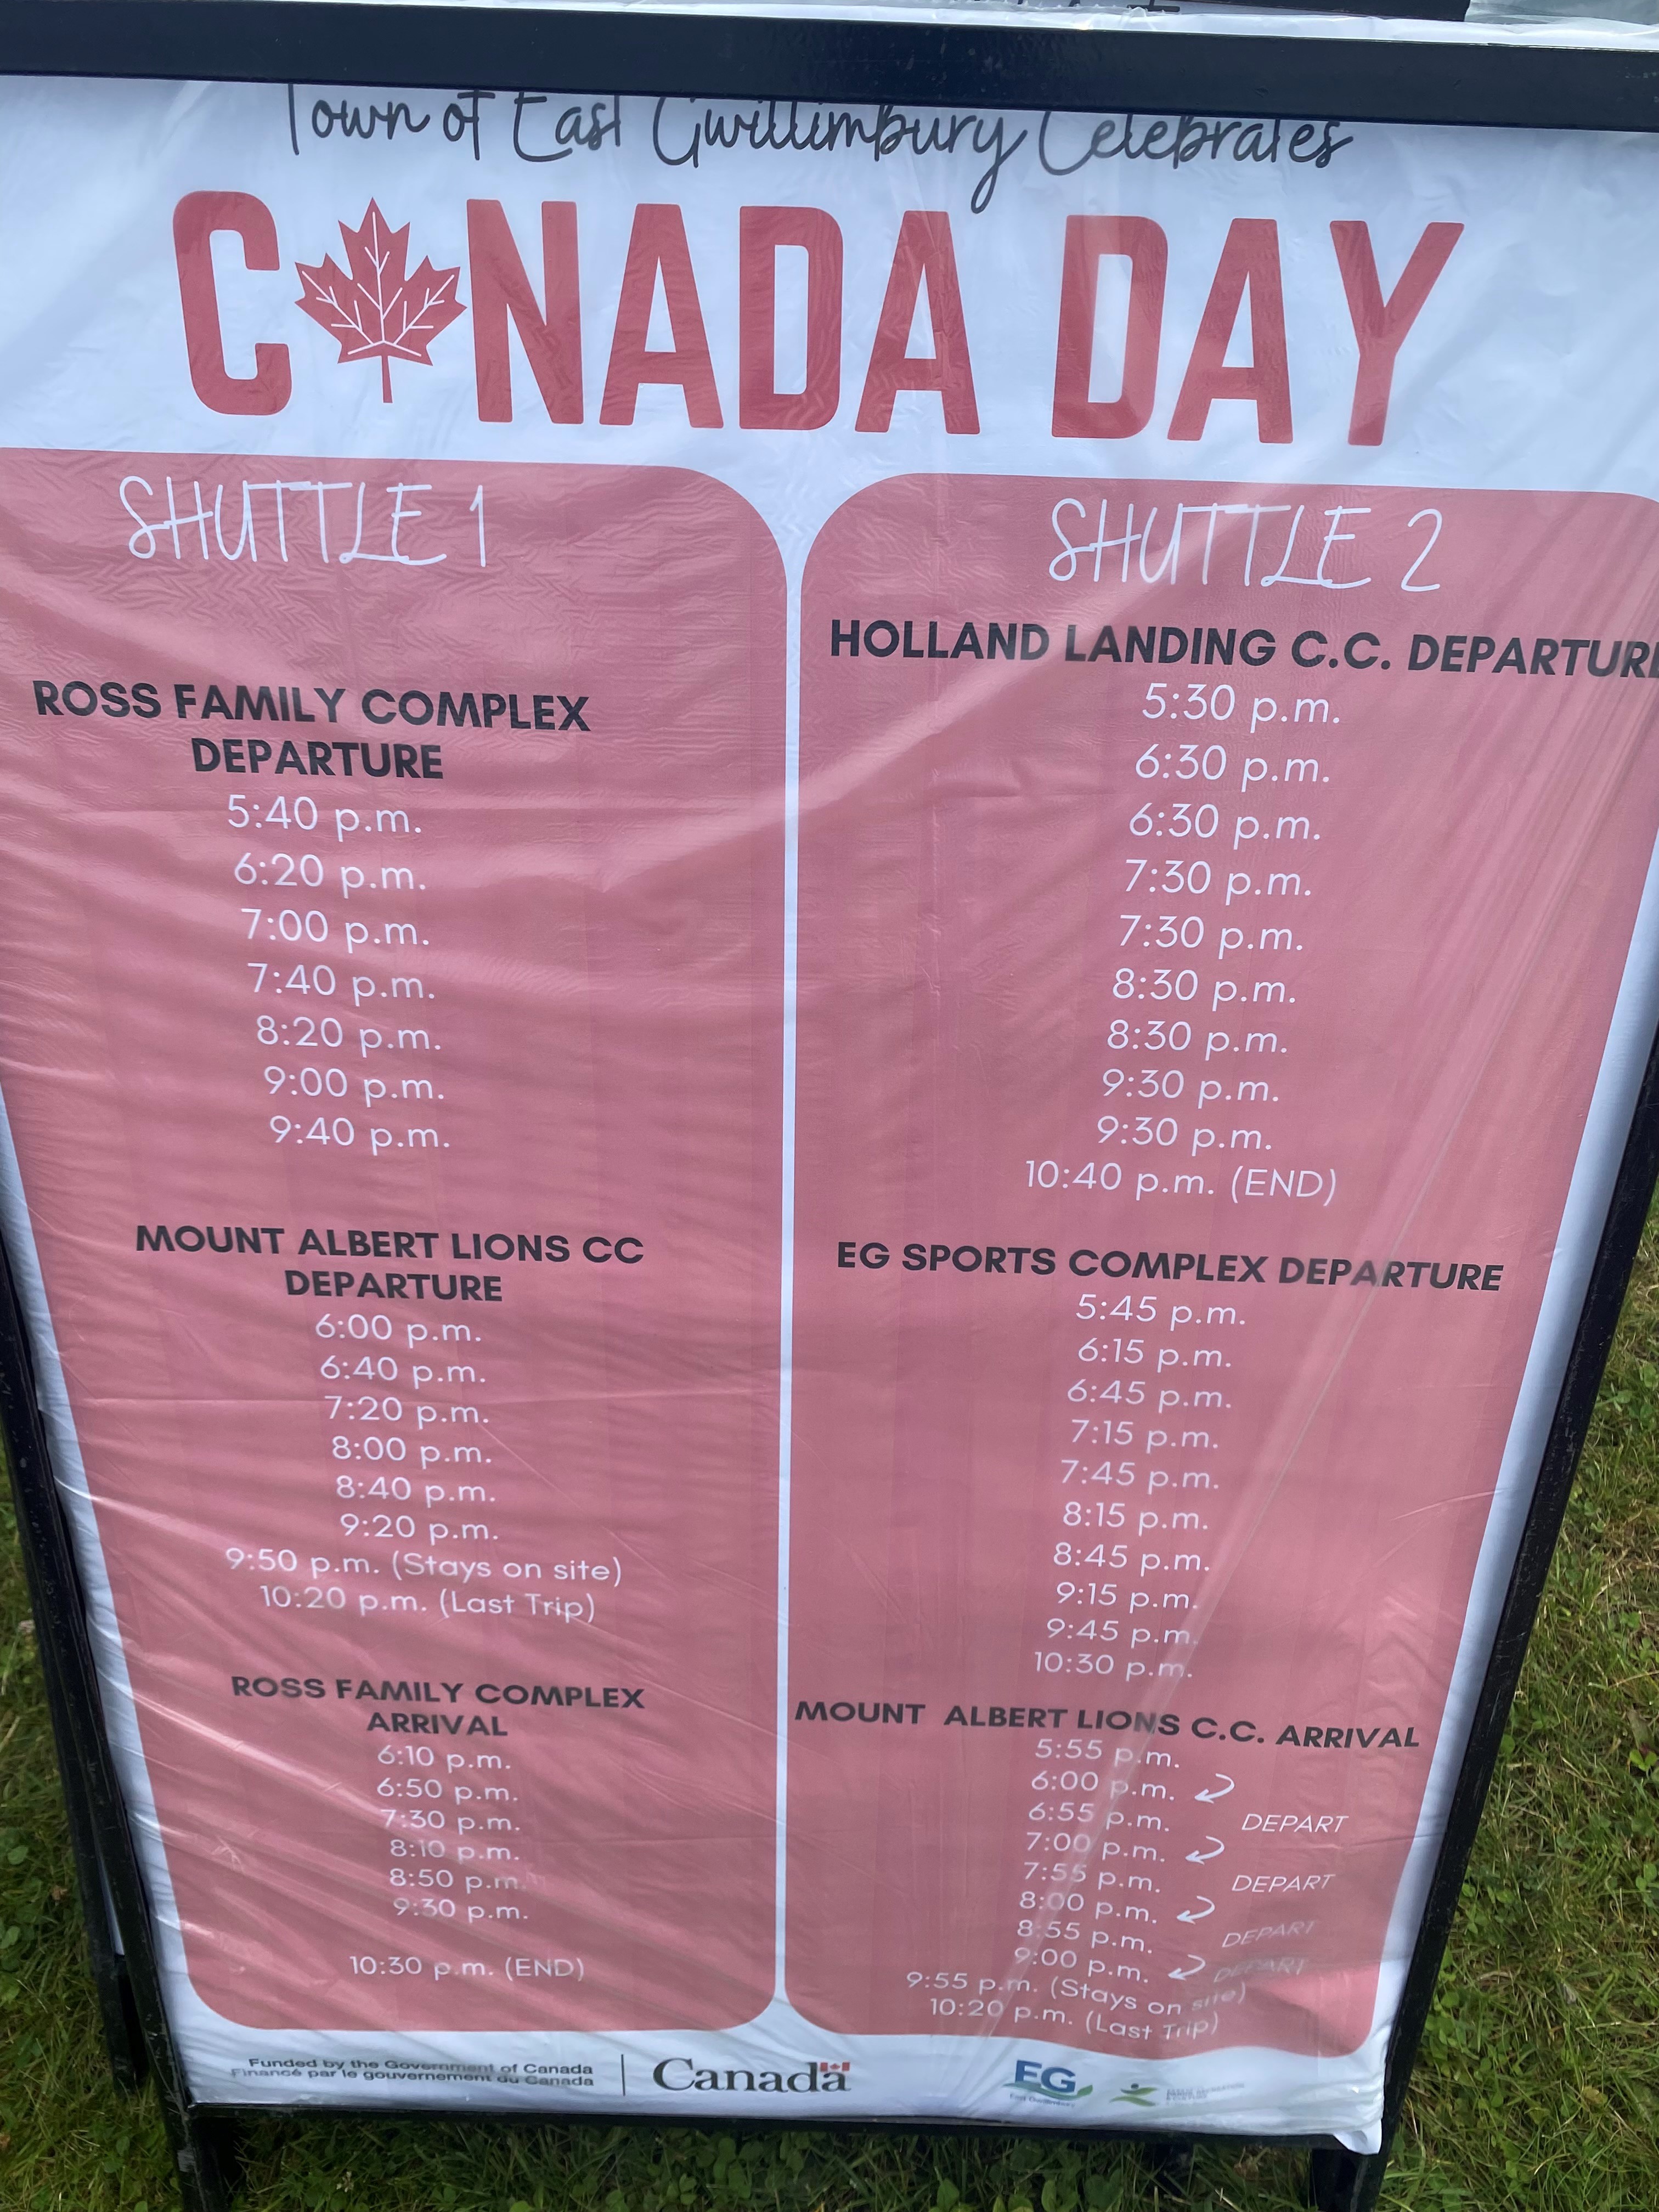 Canada Day Shuttle Bus Schedule 